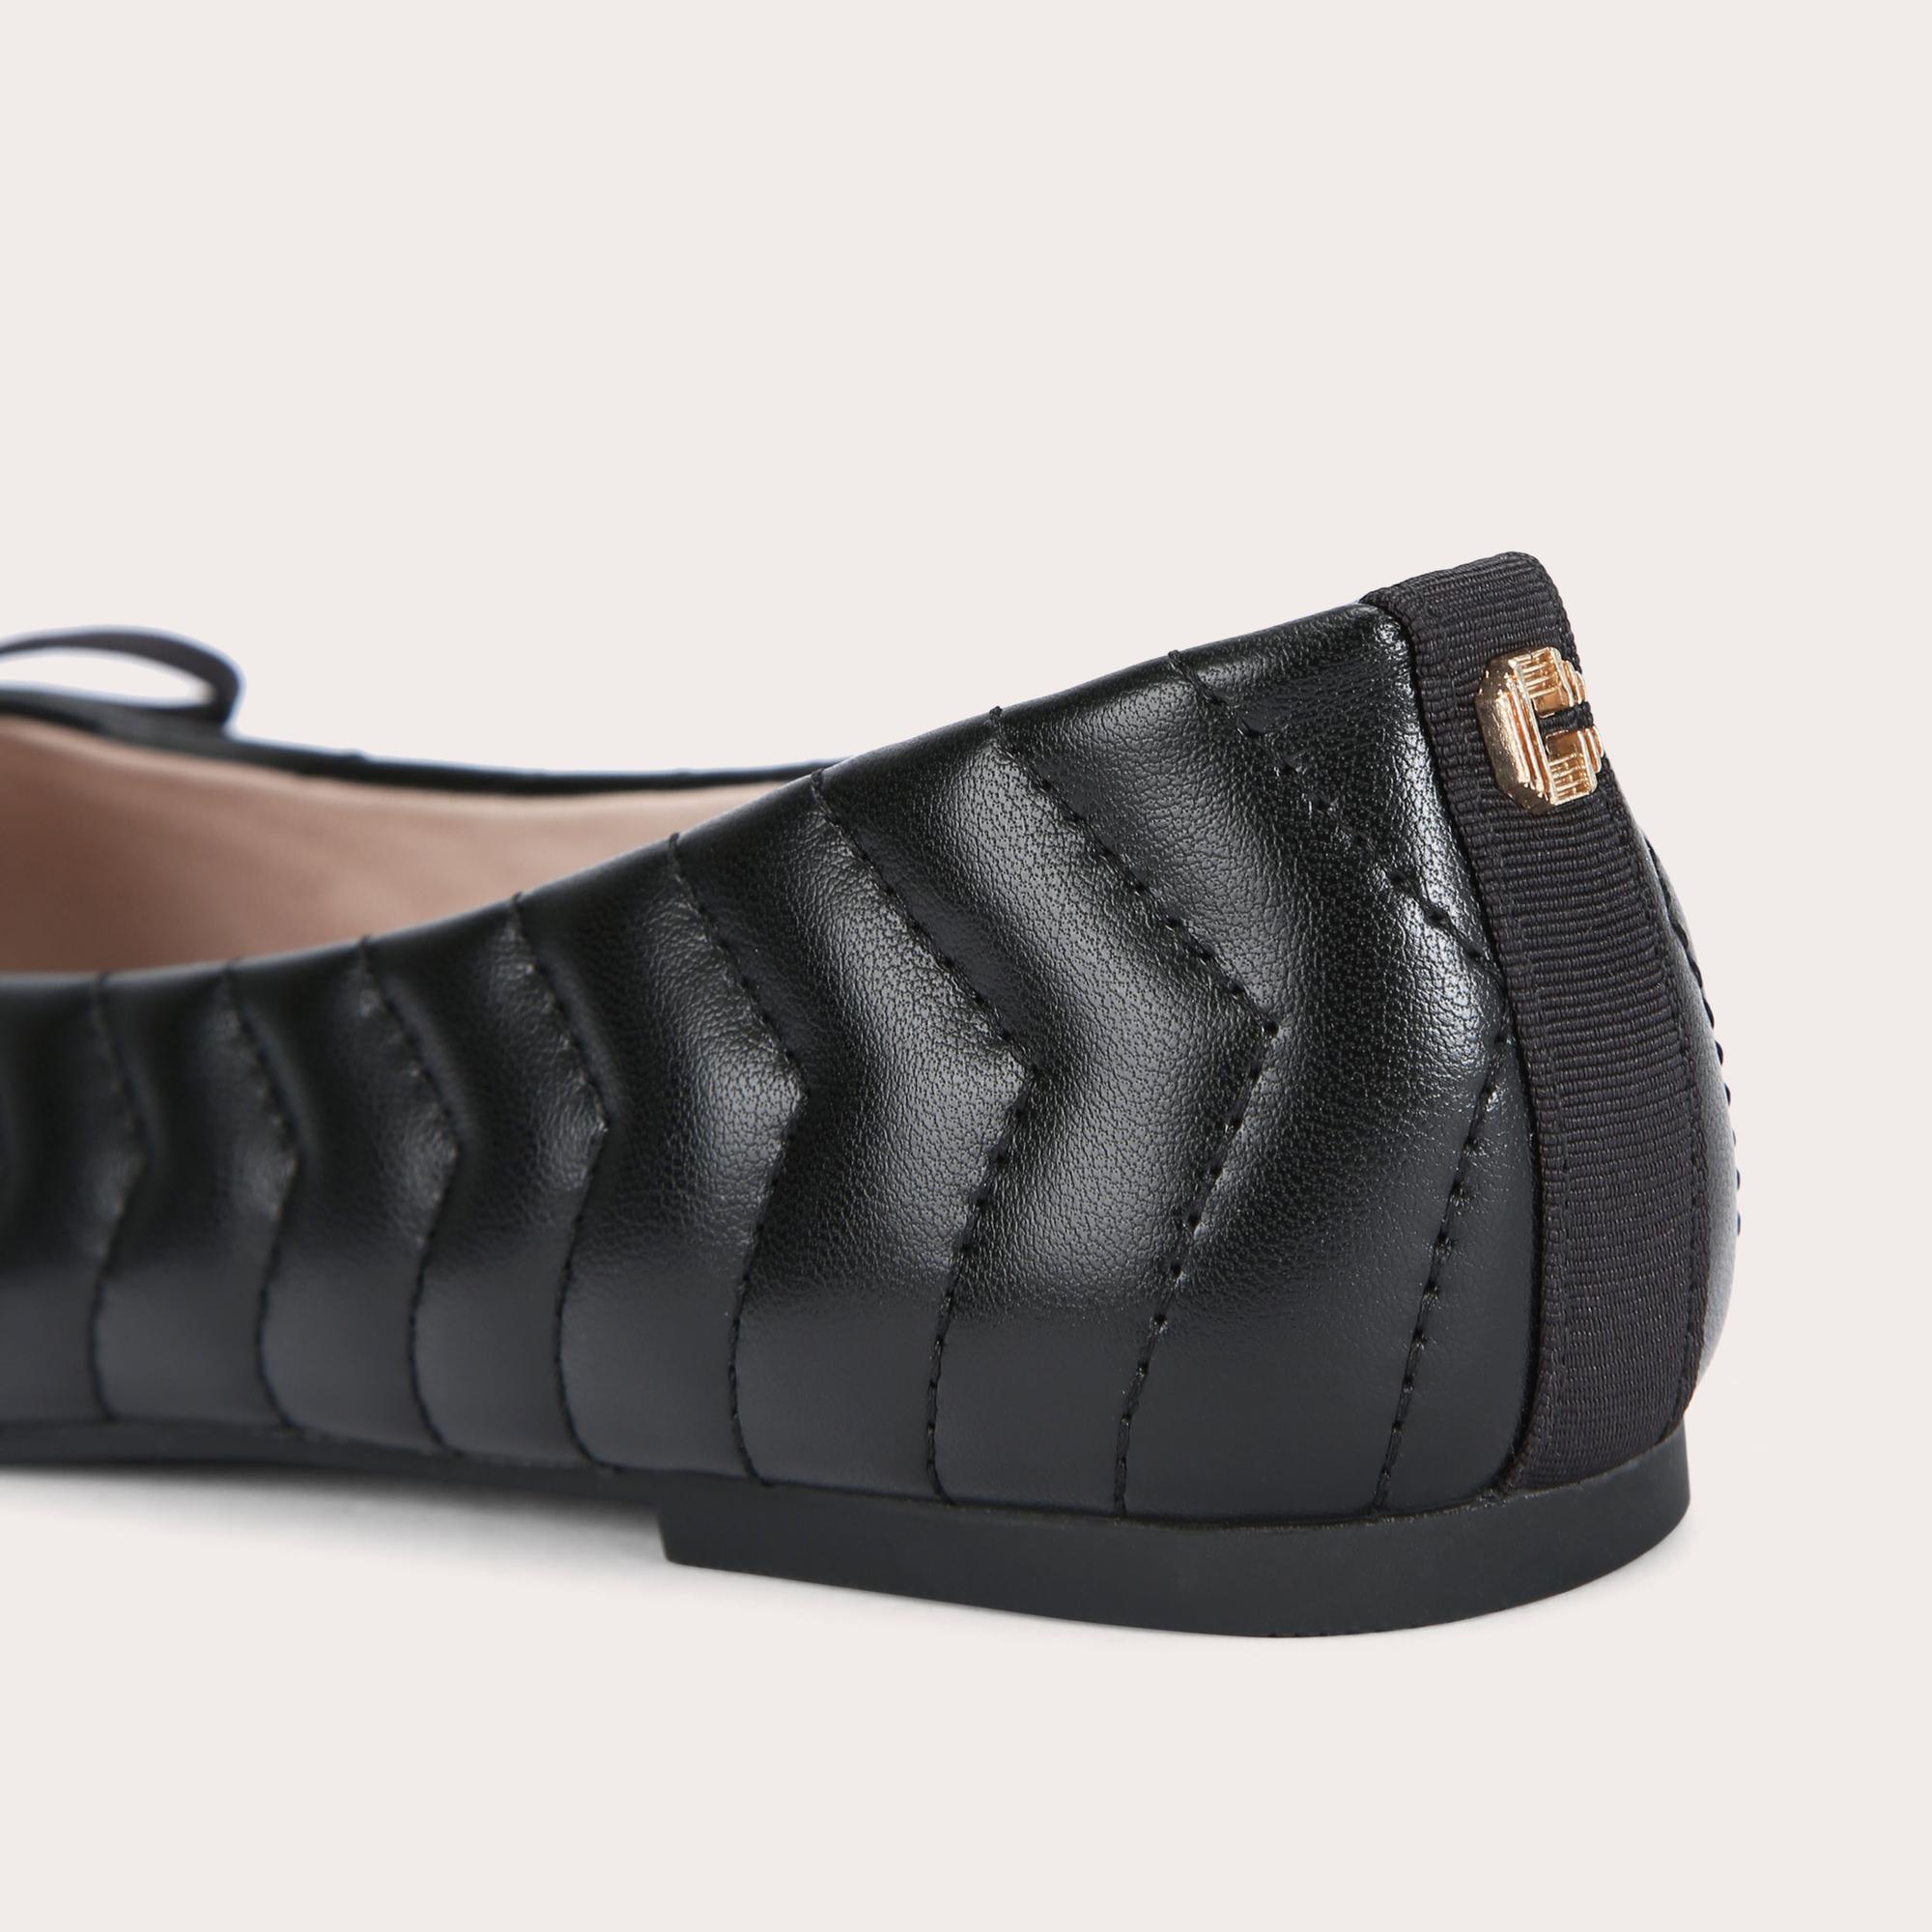 LARA BALLERINA Black Flat Shoes by CARVELA